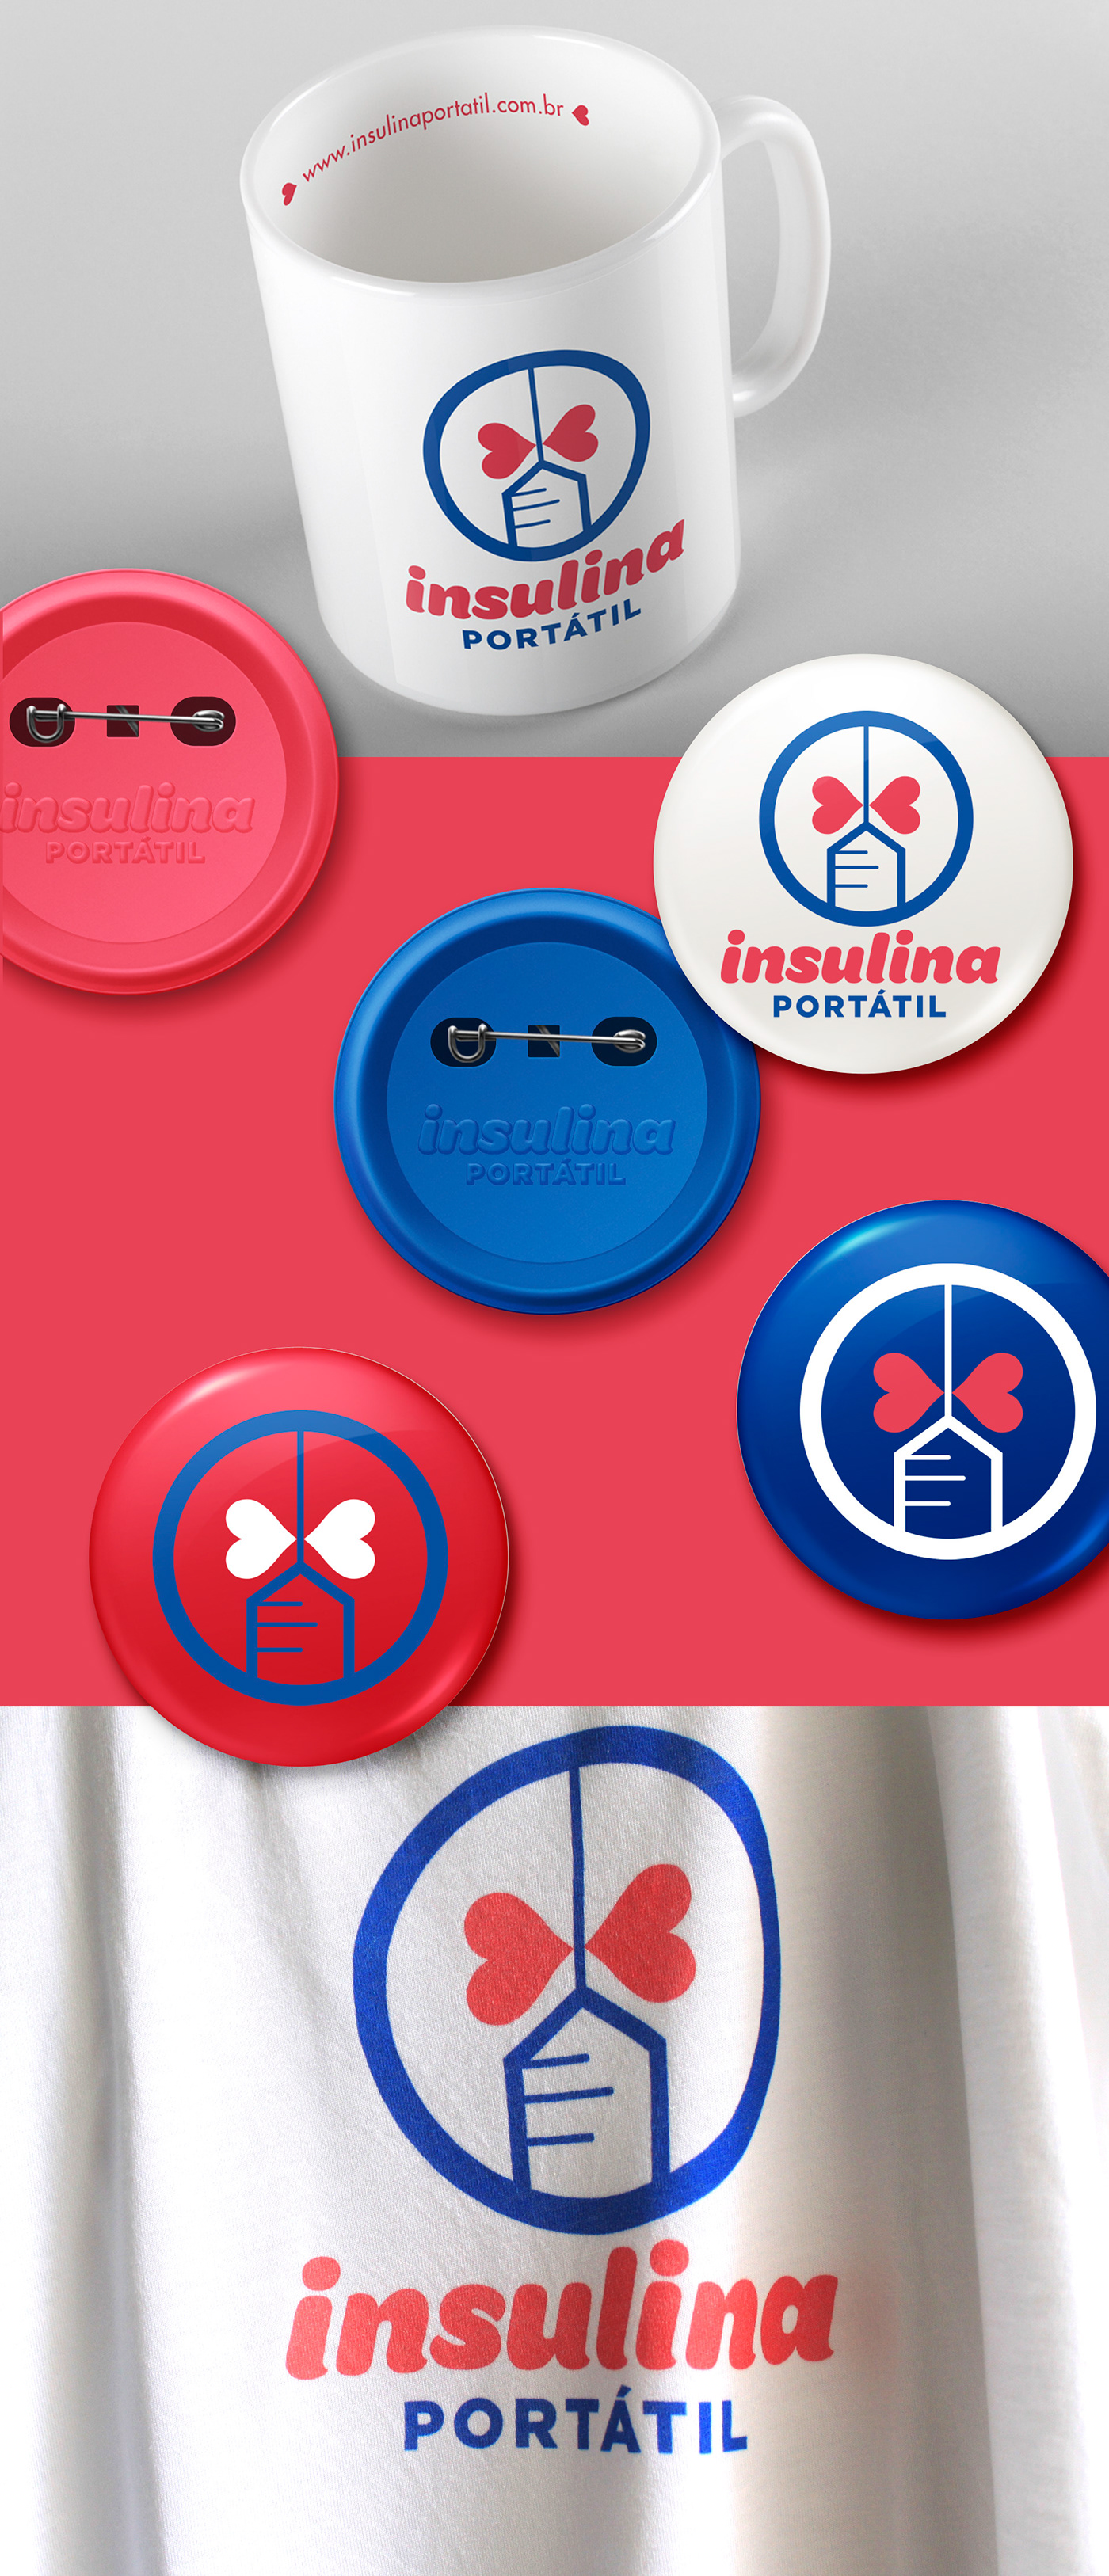 diabetes logo caligraphy visual identity brand redesign Brazil